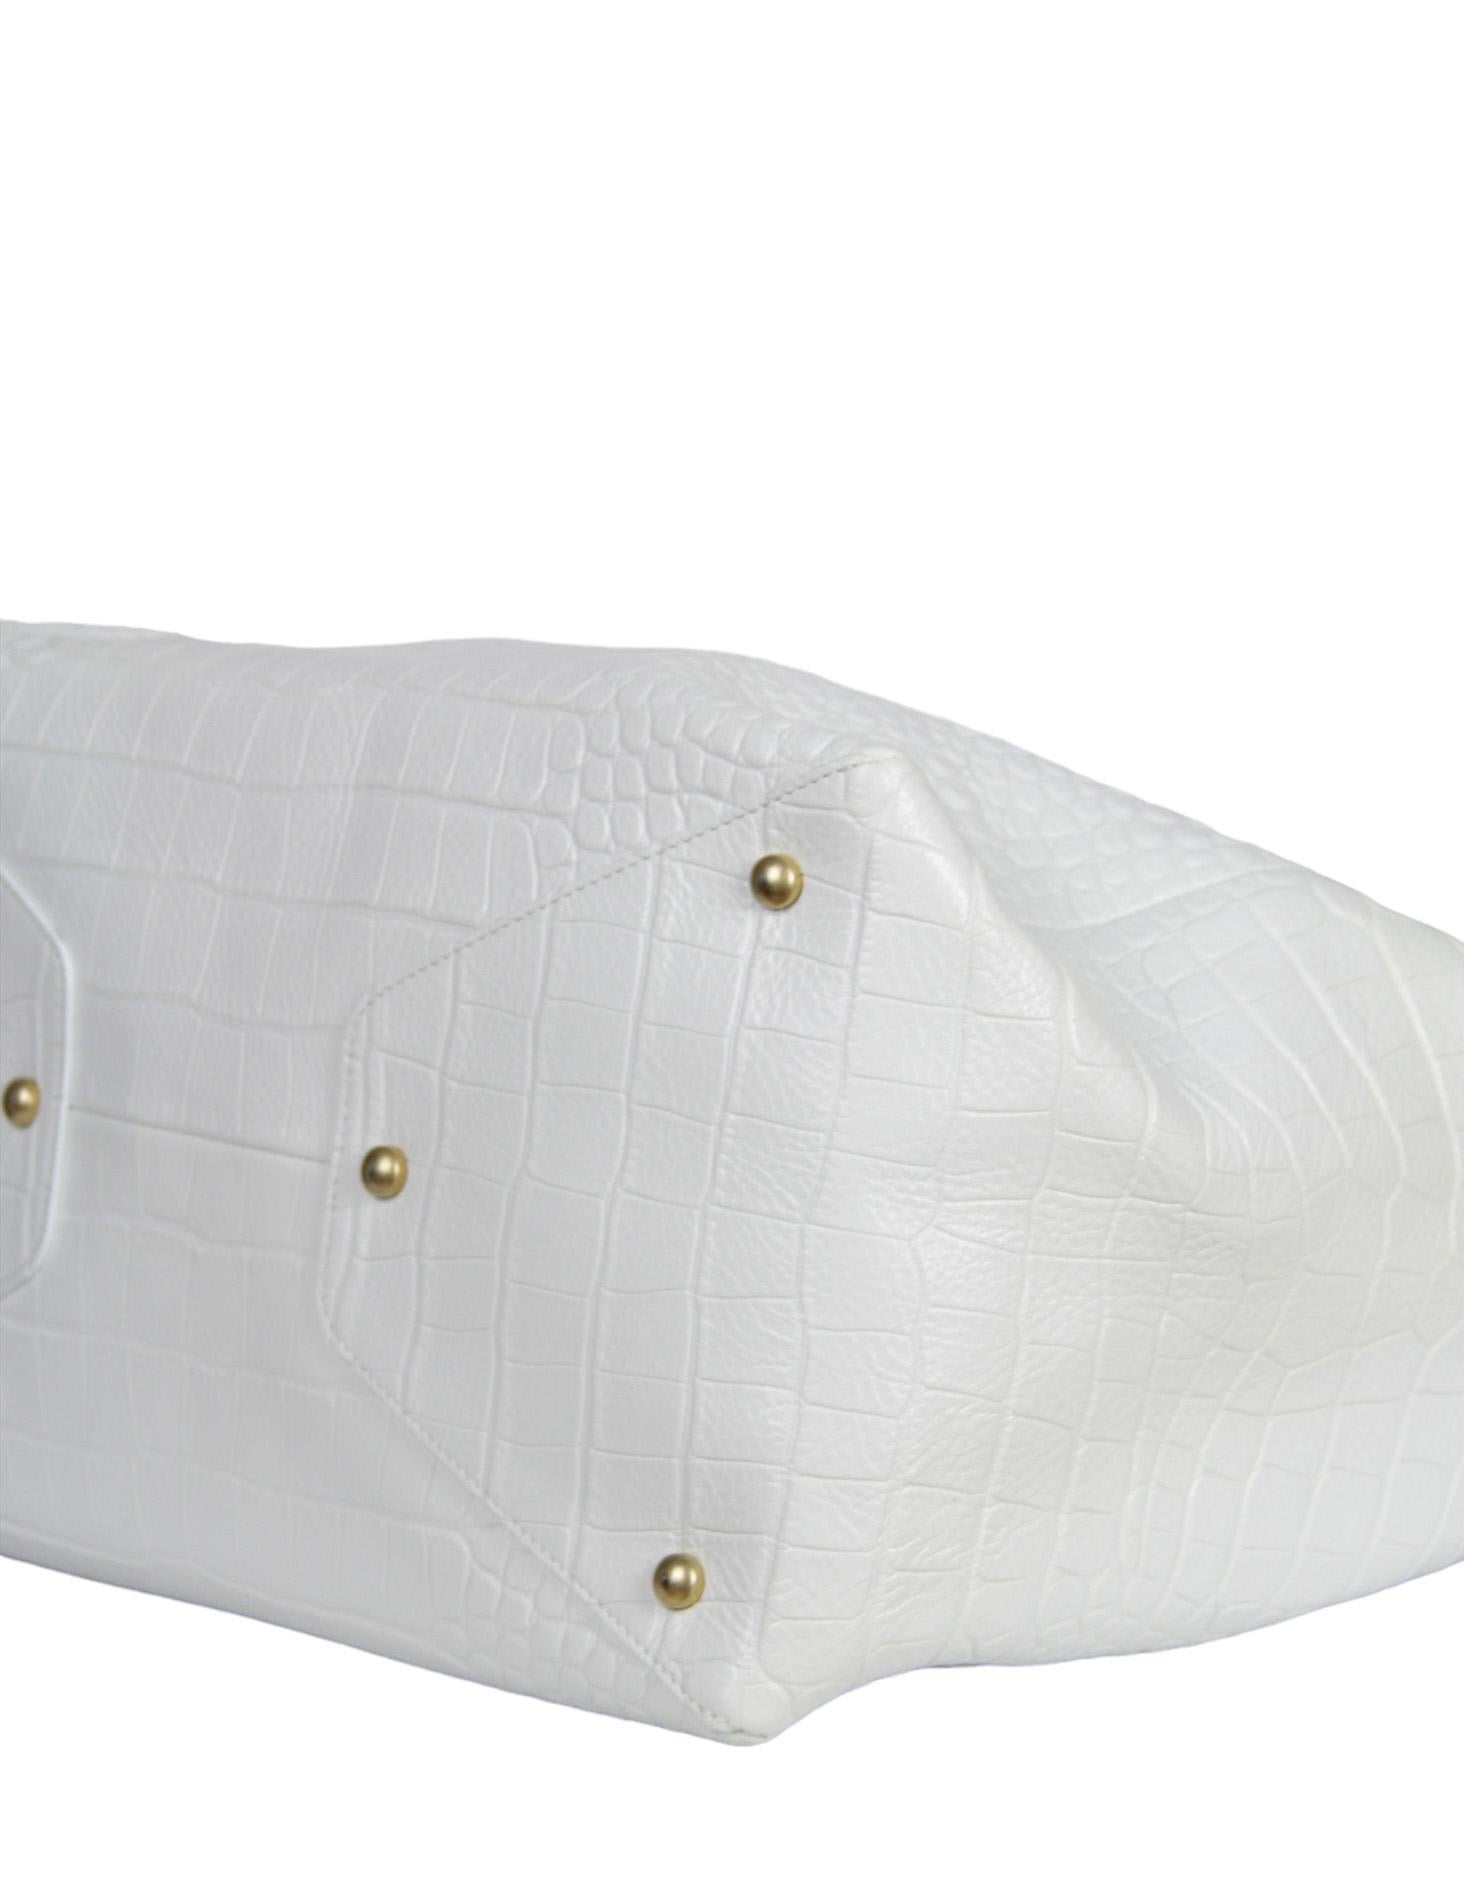 Chanel Paris-New York grand sac fourre-tout Coco en crocodile embossé blanc 1